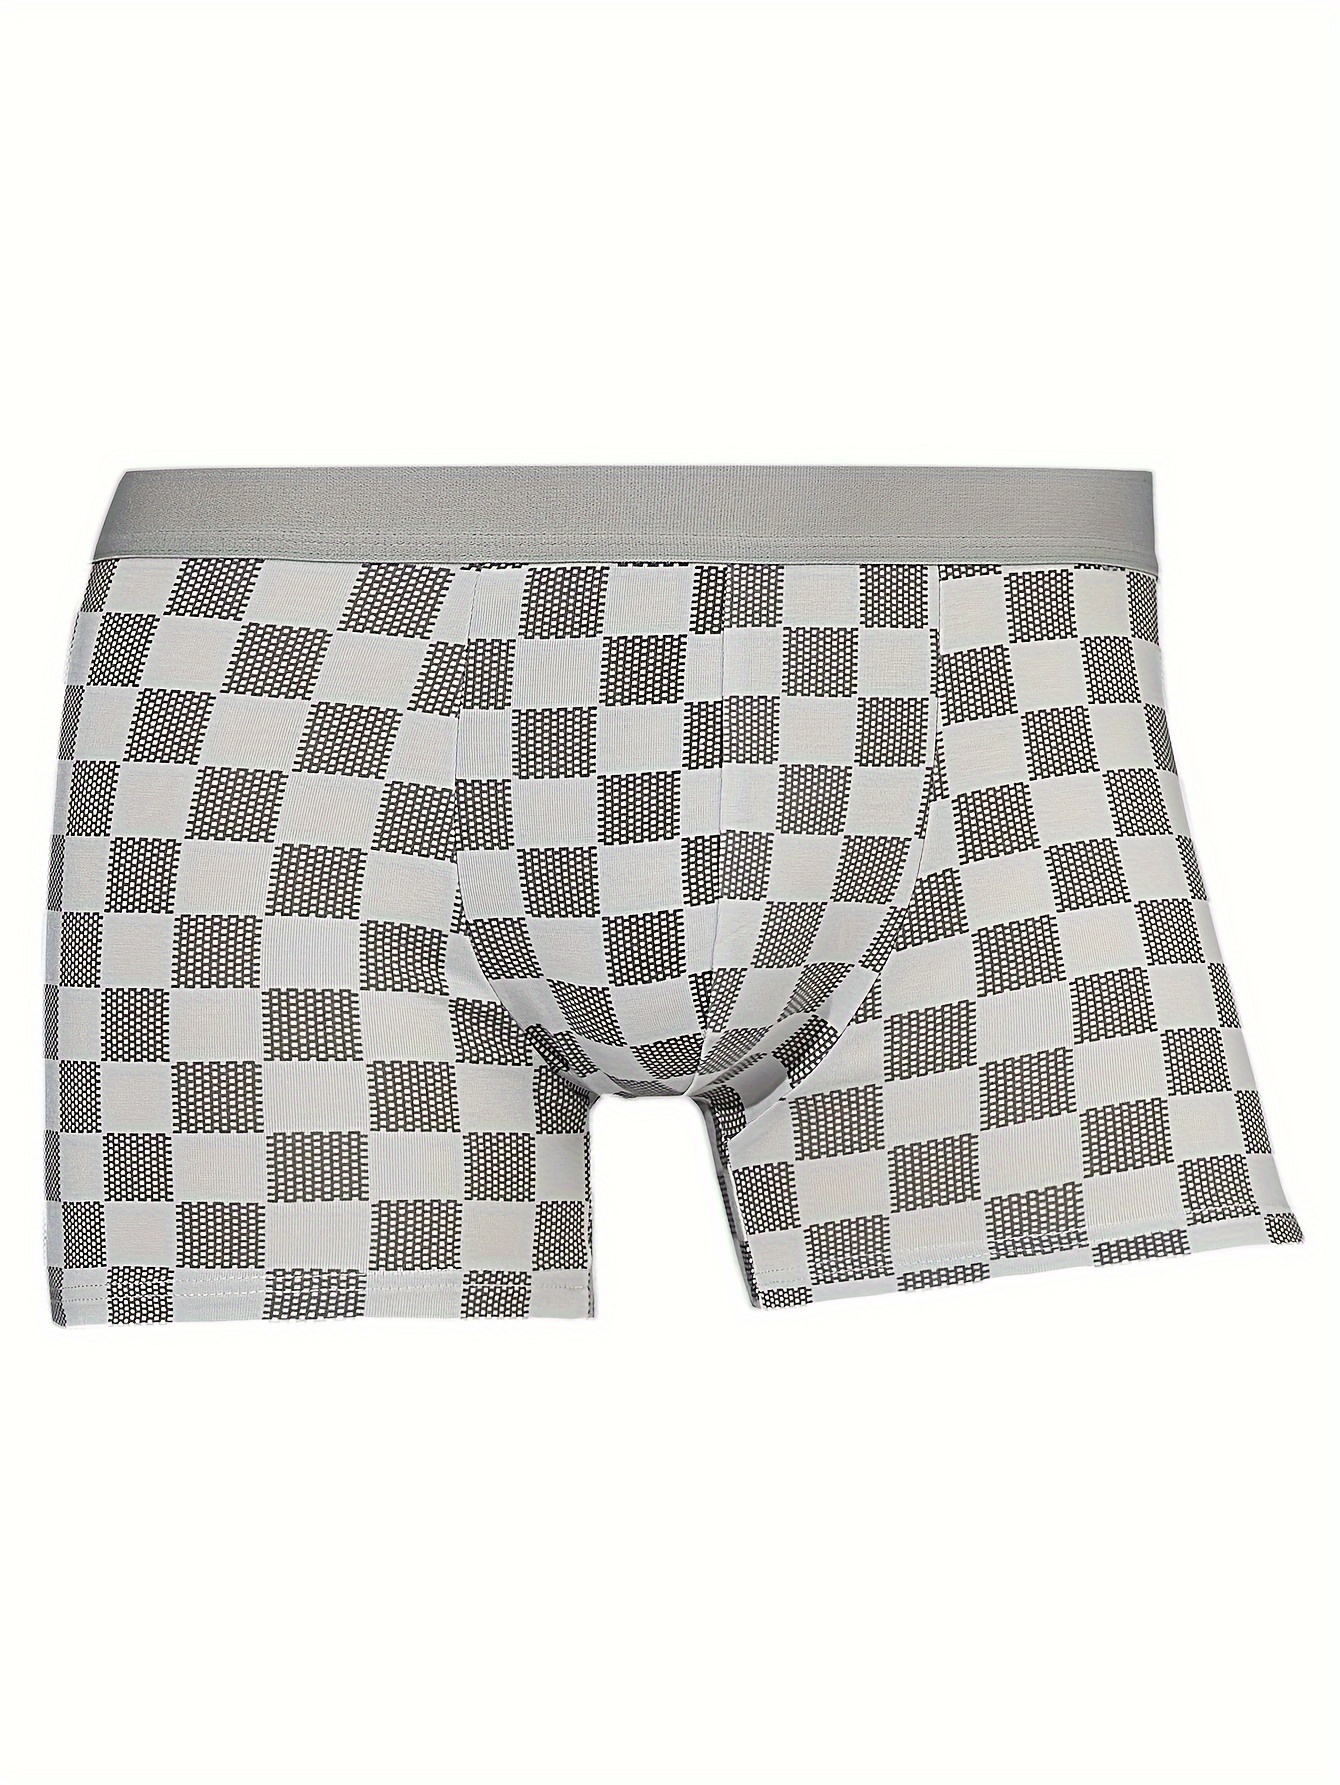  Louis Vuitton - Men's Underwear / Men's Clothing